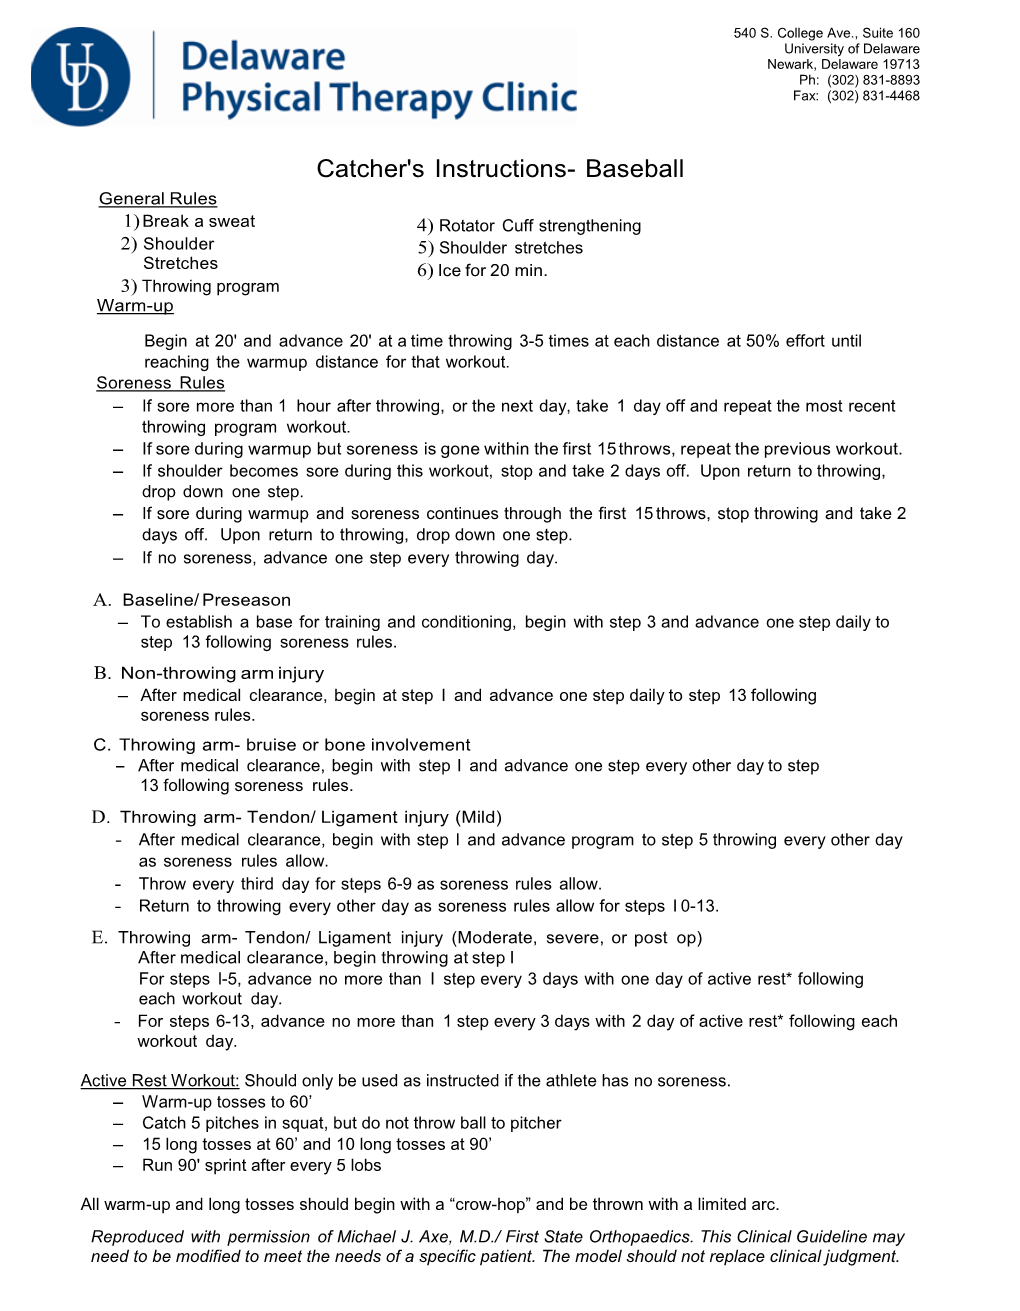 Catcher's Instructions- Baseball